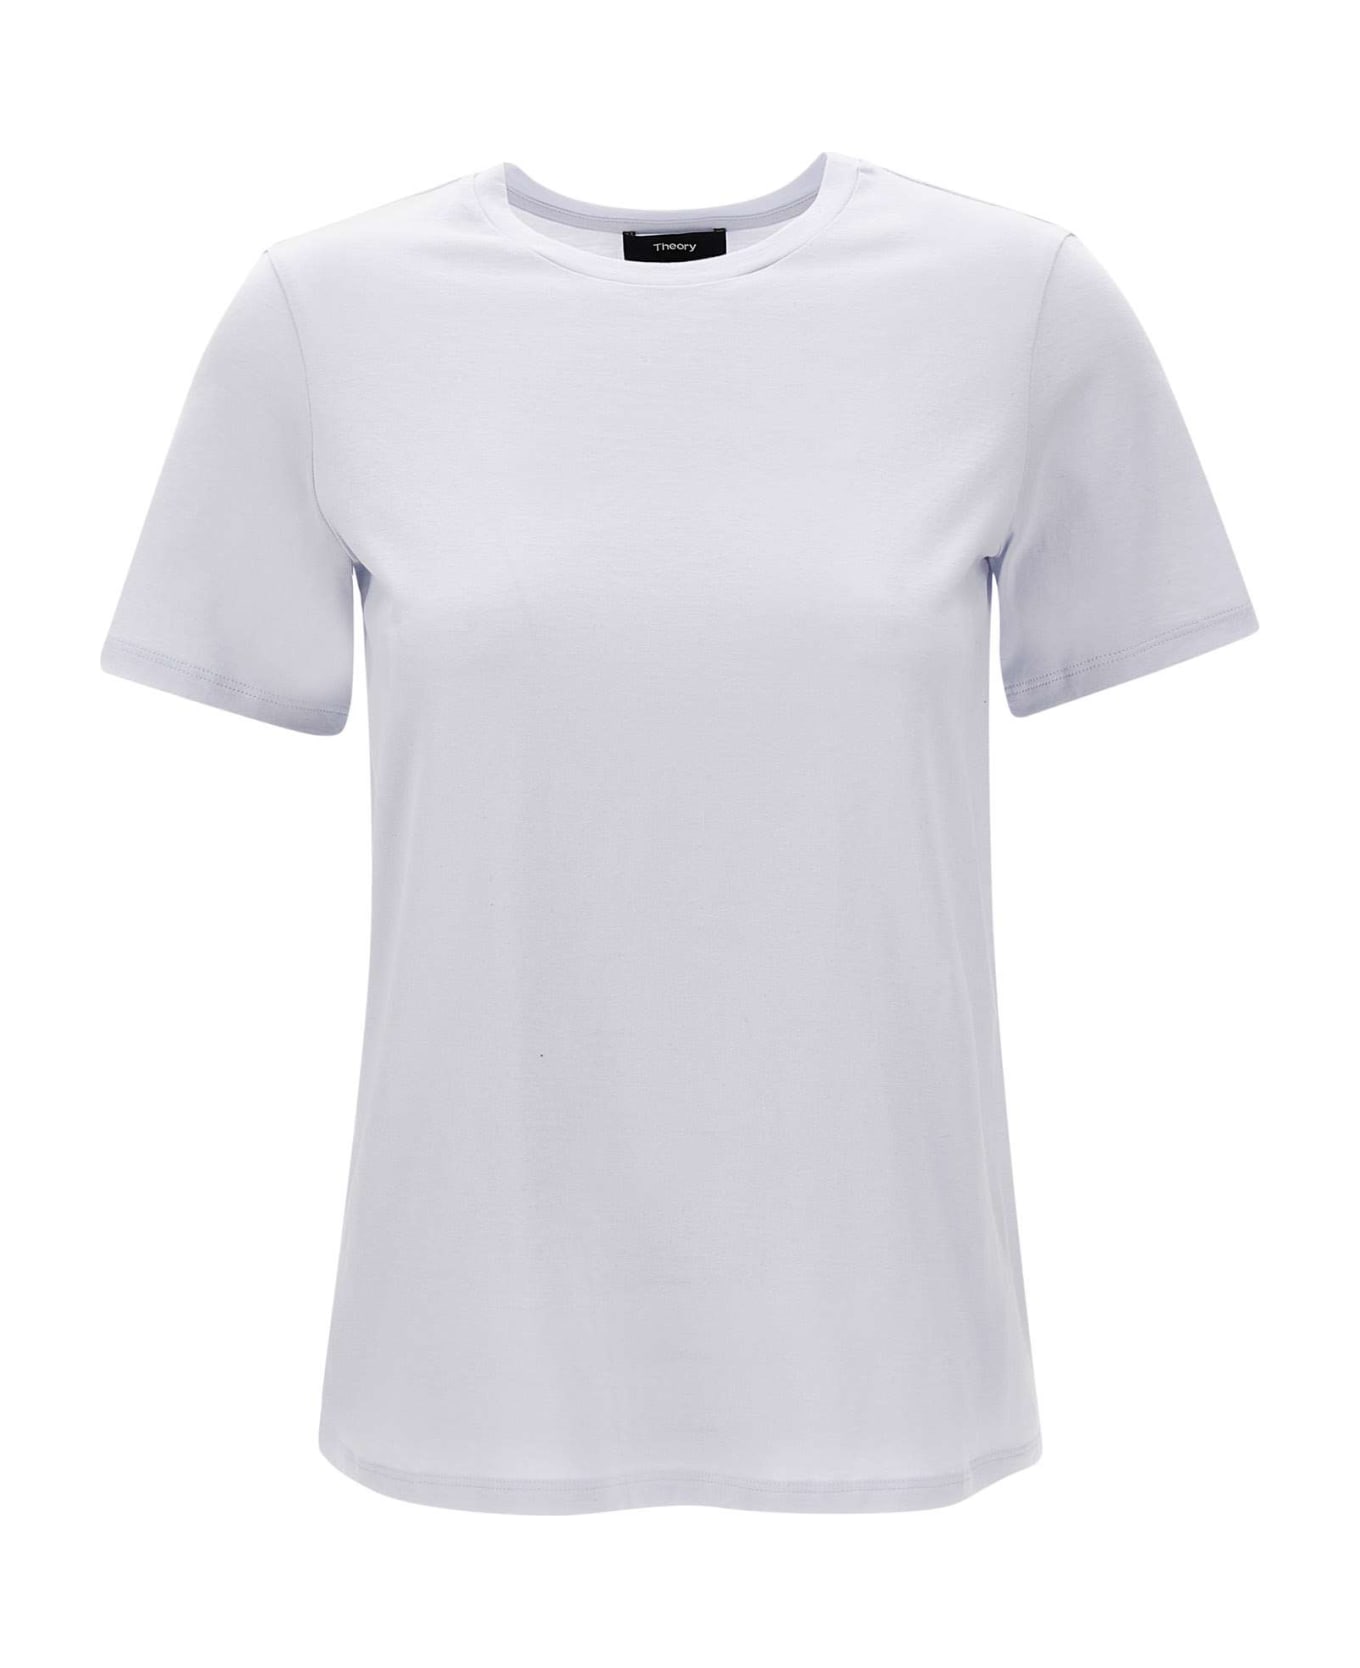 Theory "apex Tee" Pima Cotton T-shirt - GREY Tシャツ